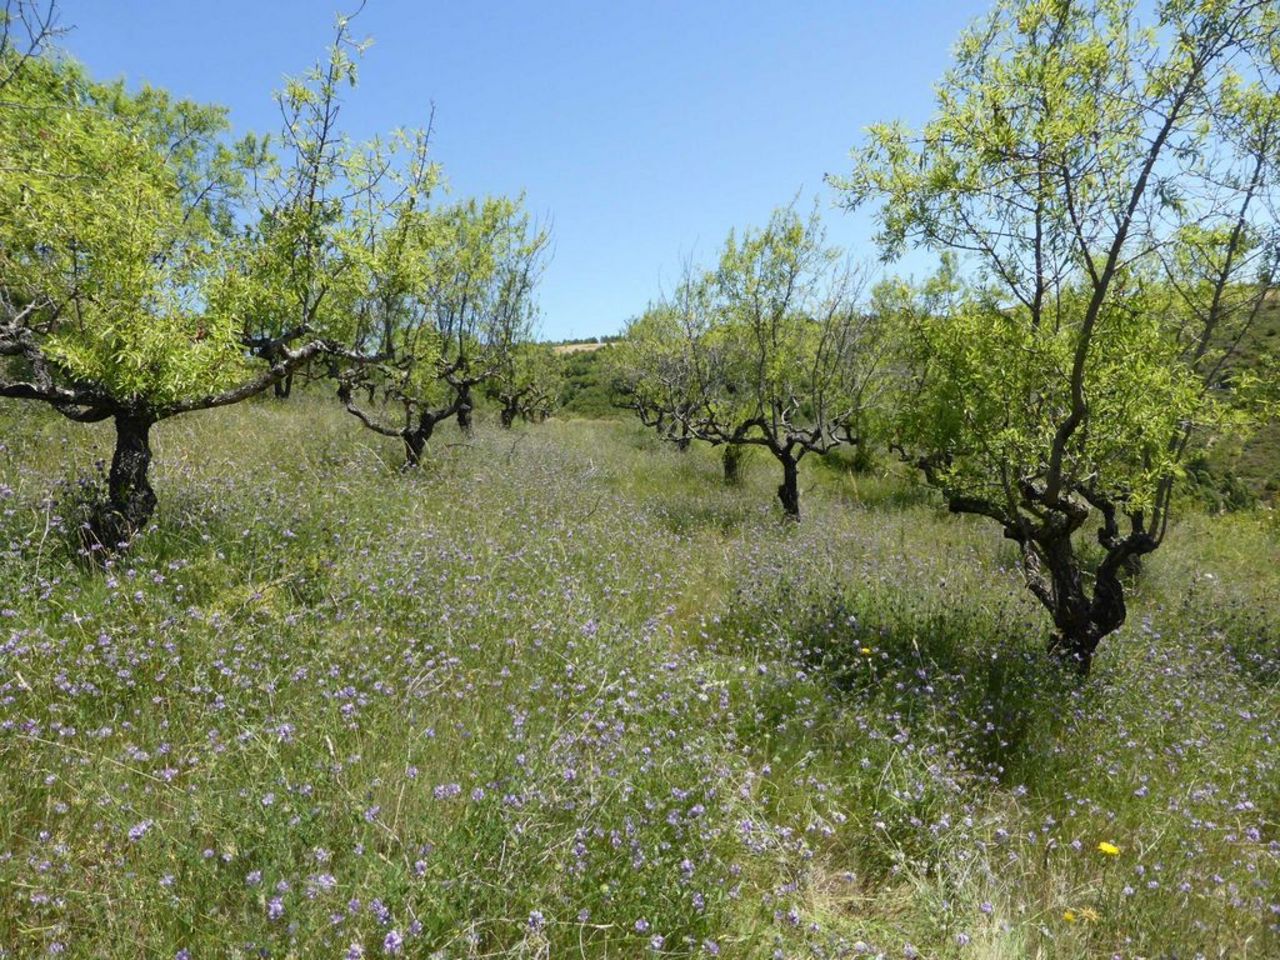 Flowering meadow with olive trees in Spain